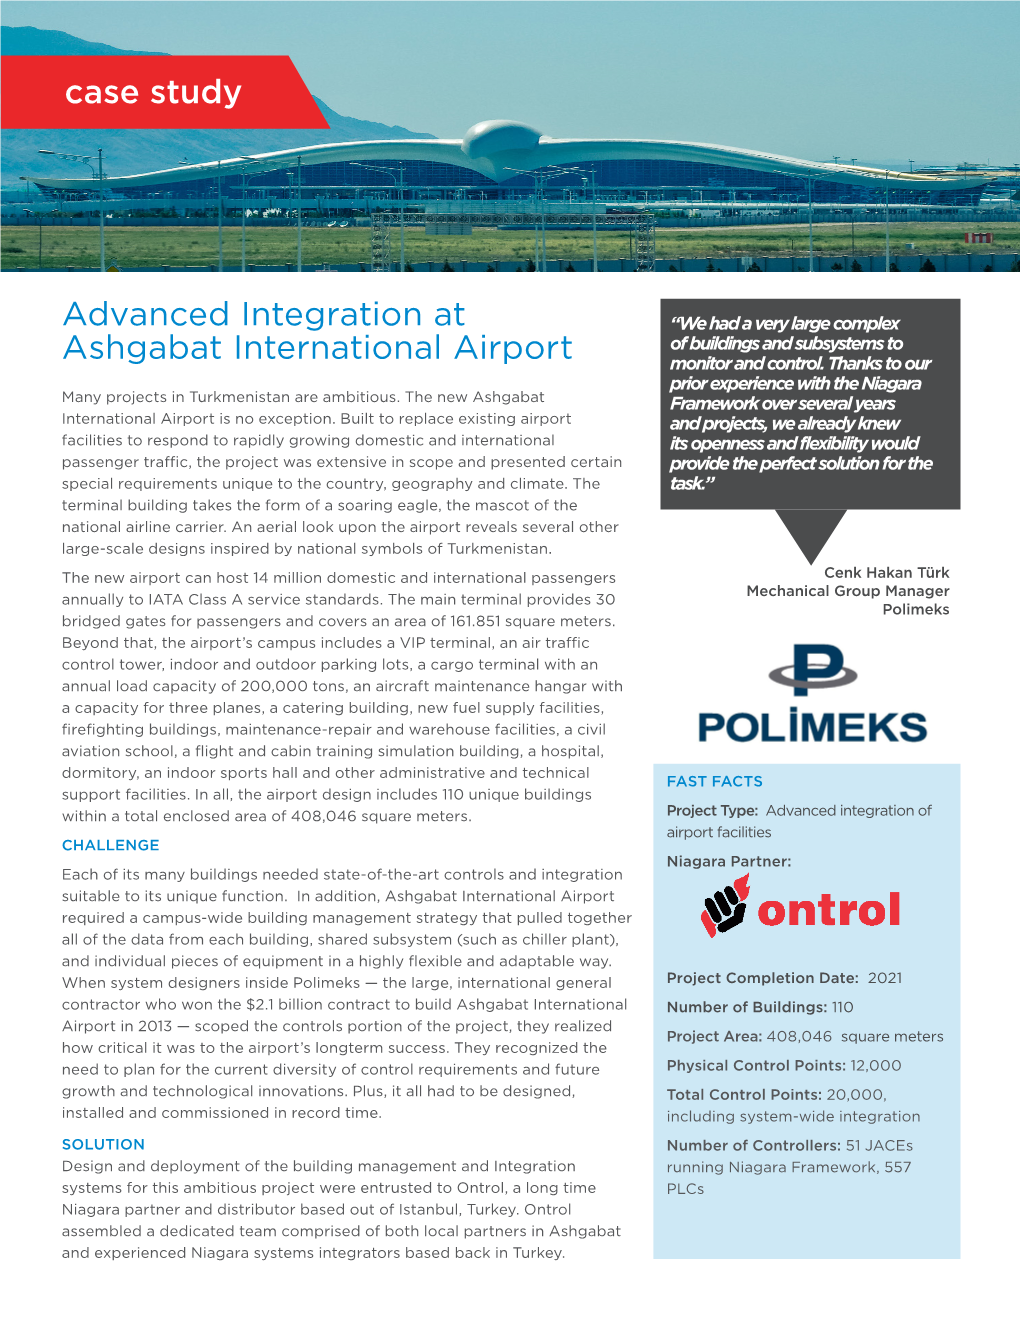 Advanced Integration at Ashgabat International Airport